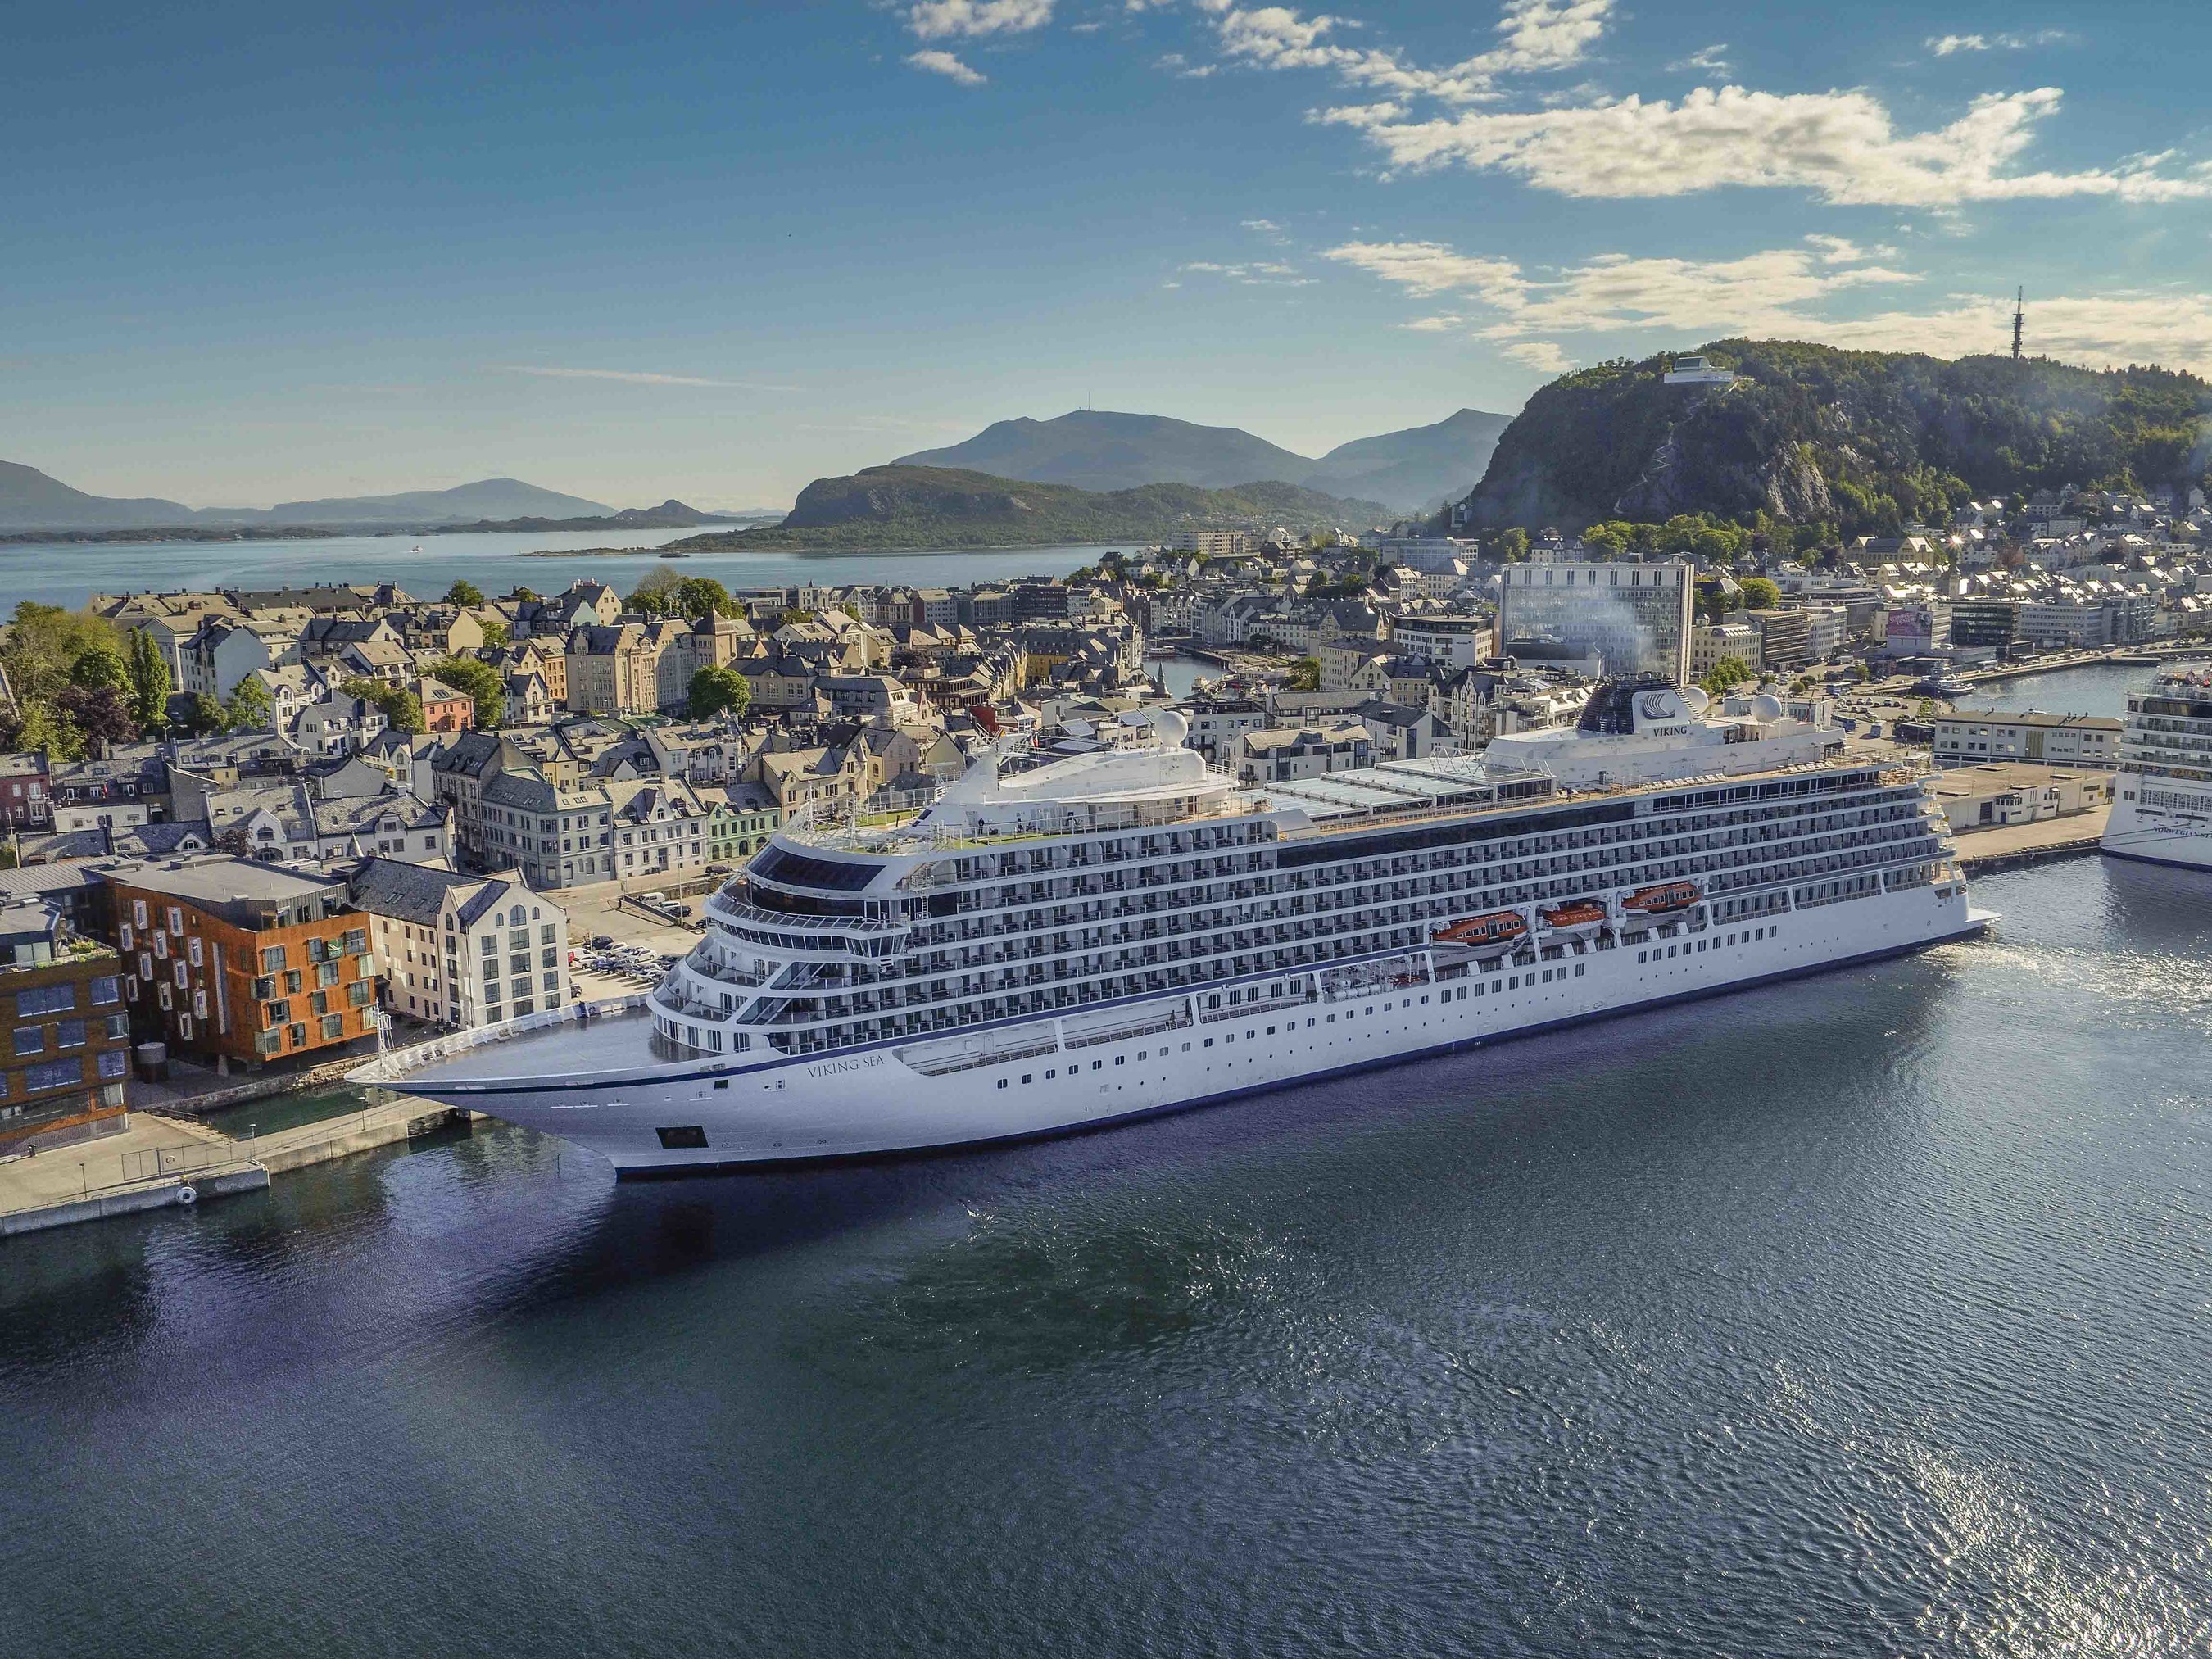 Viking Cruises Founder And Chairman Torstein Hagen Commemorates Five